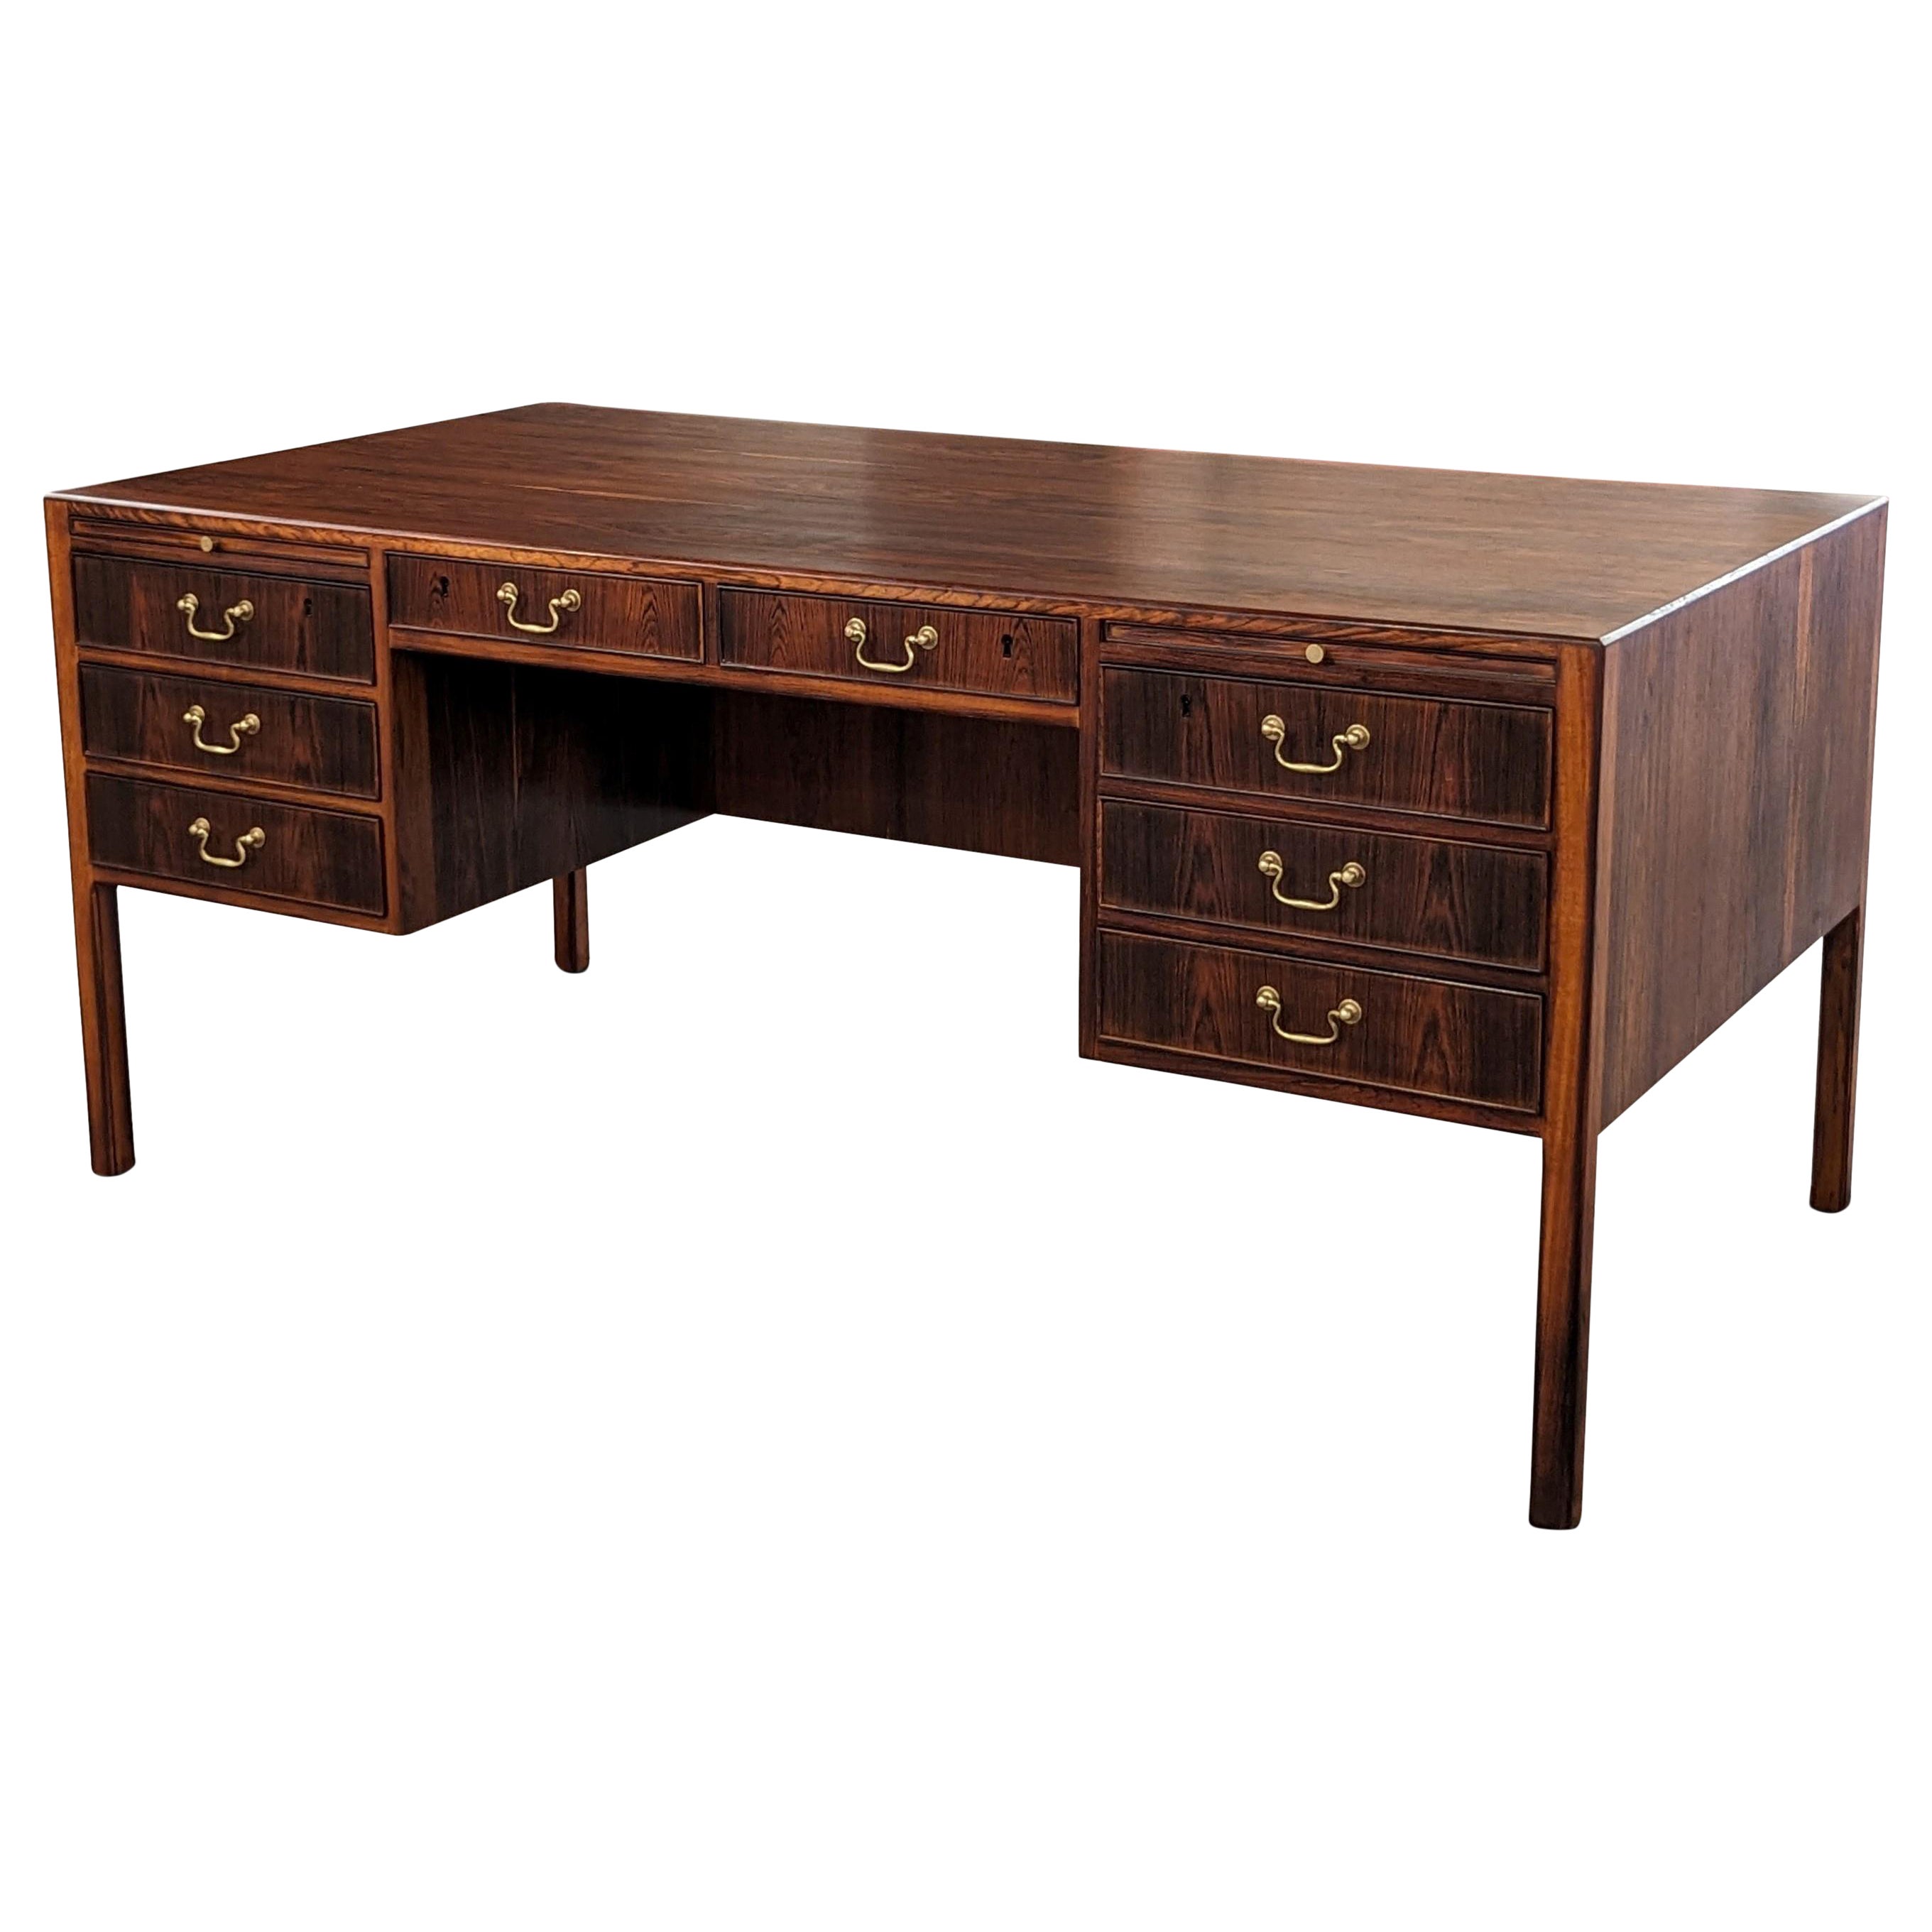 Ole Wancher Rosewood Desk - 0823177 Vintage Danish Mid Century For Sale